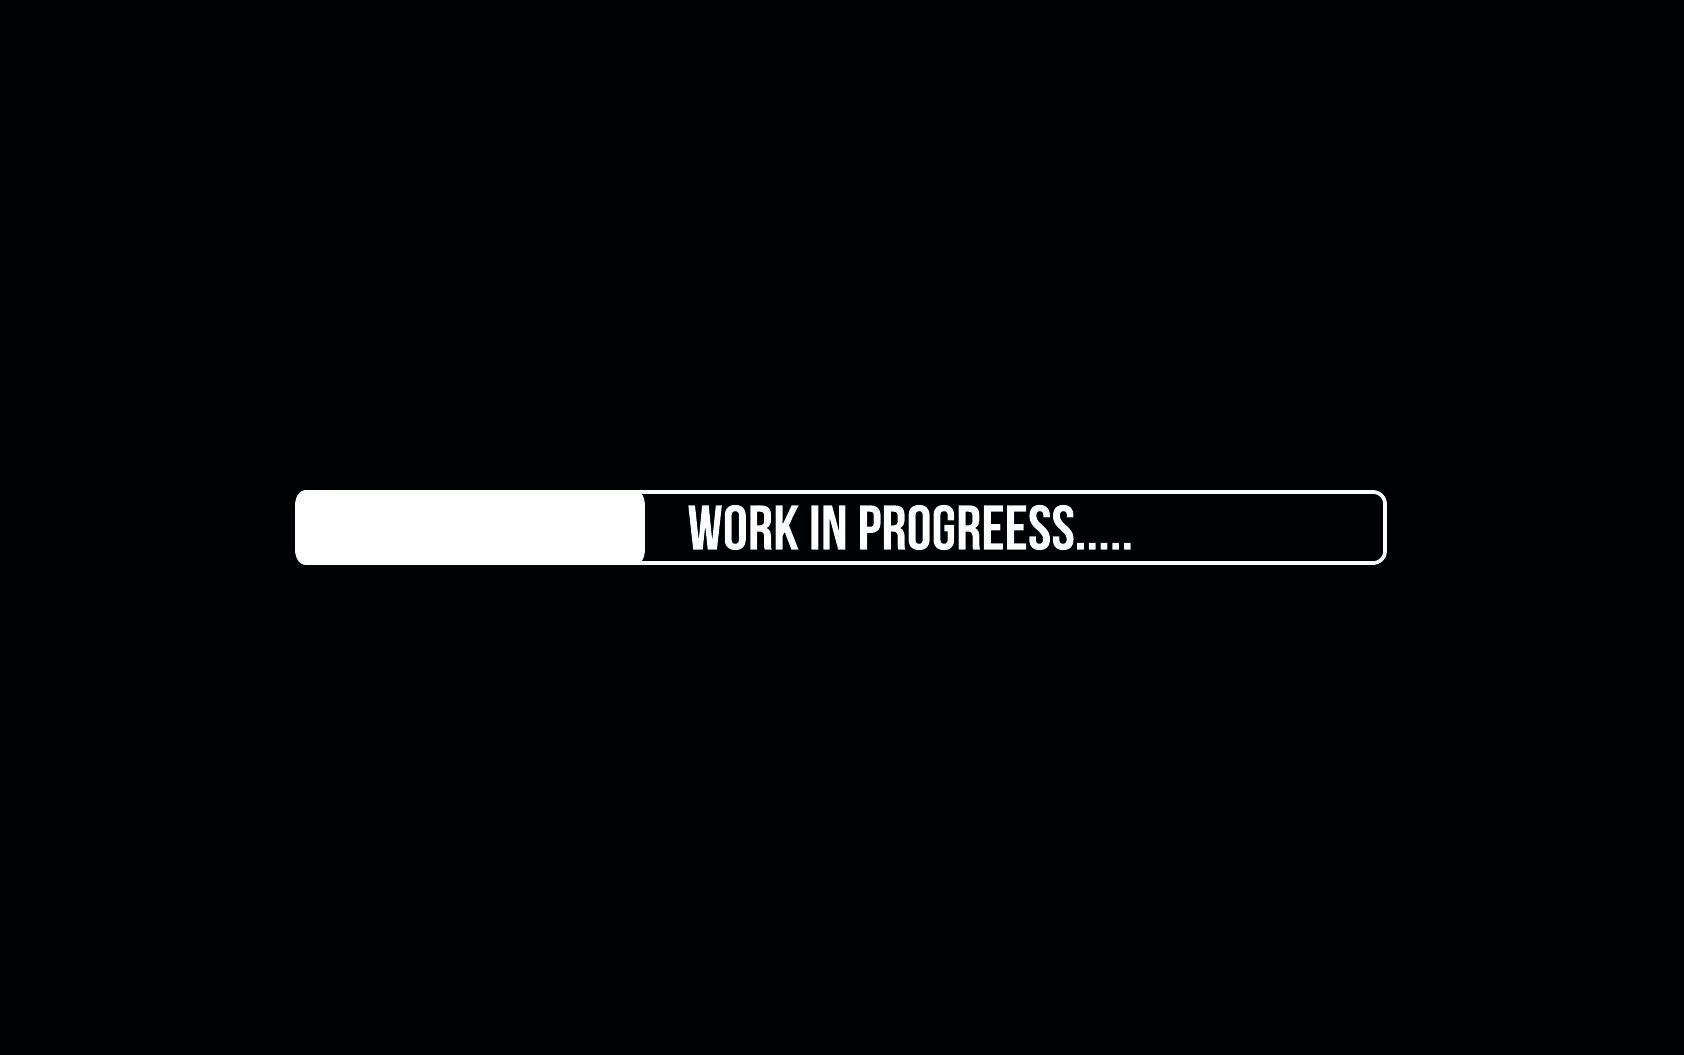 In Progress Wallpaper. Work Progress Wallpaper, Carousel of Progress Wallpaper and In Progress Wallpaper